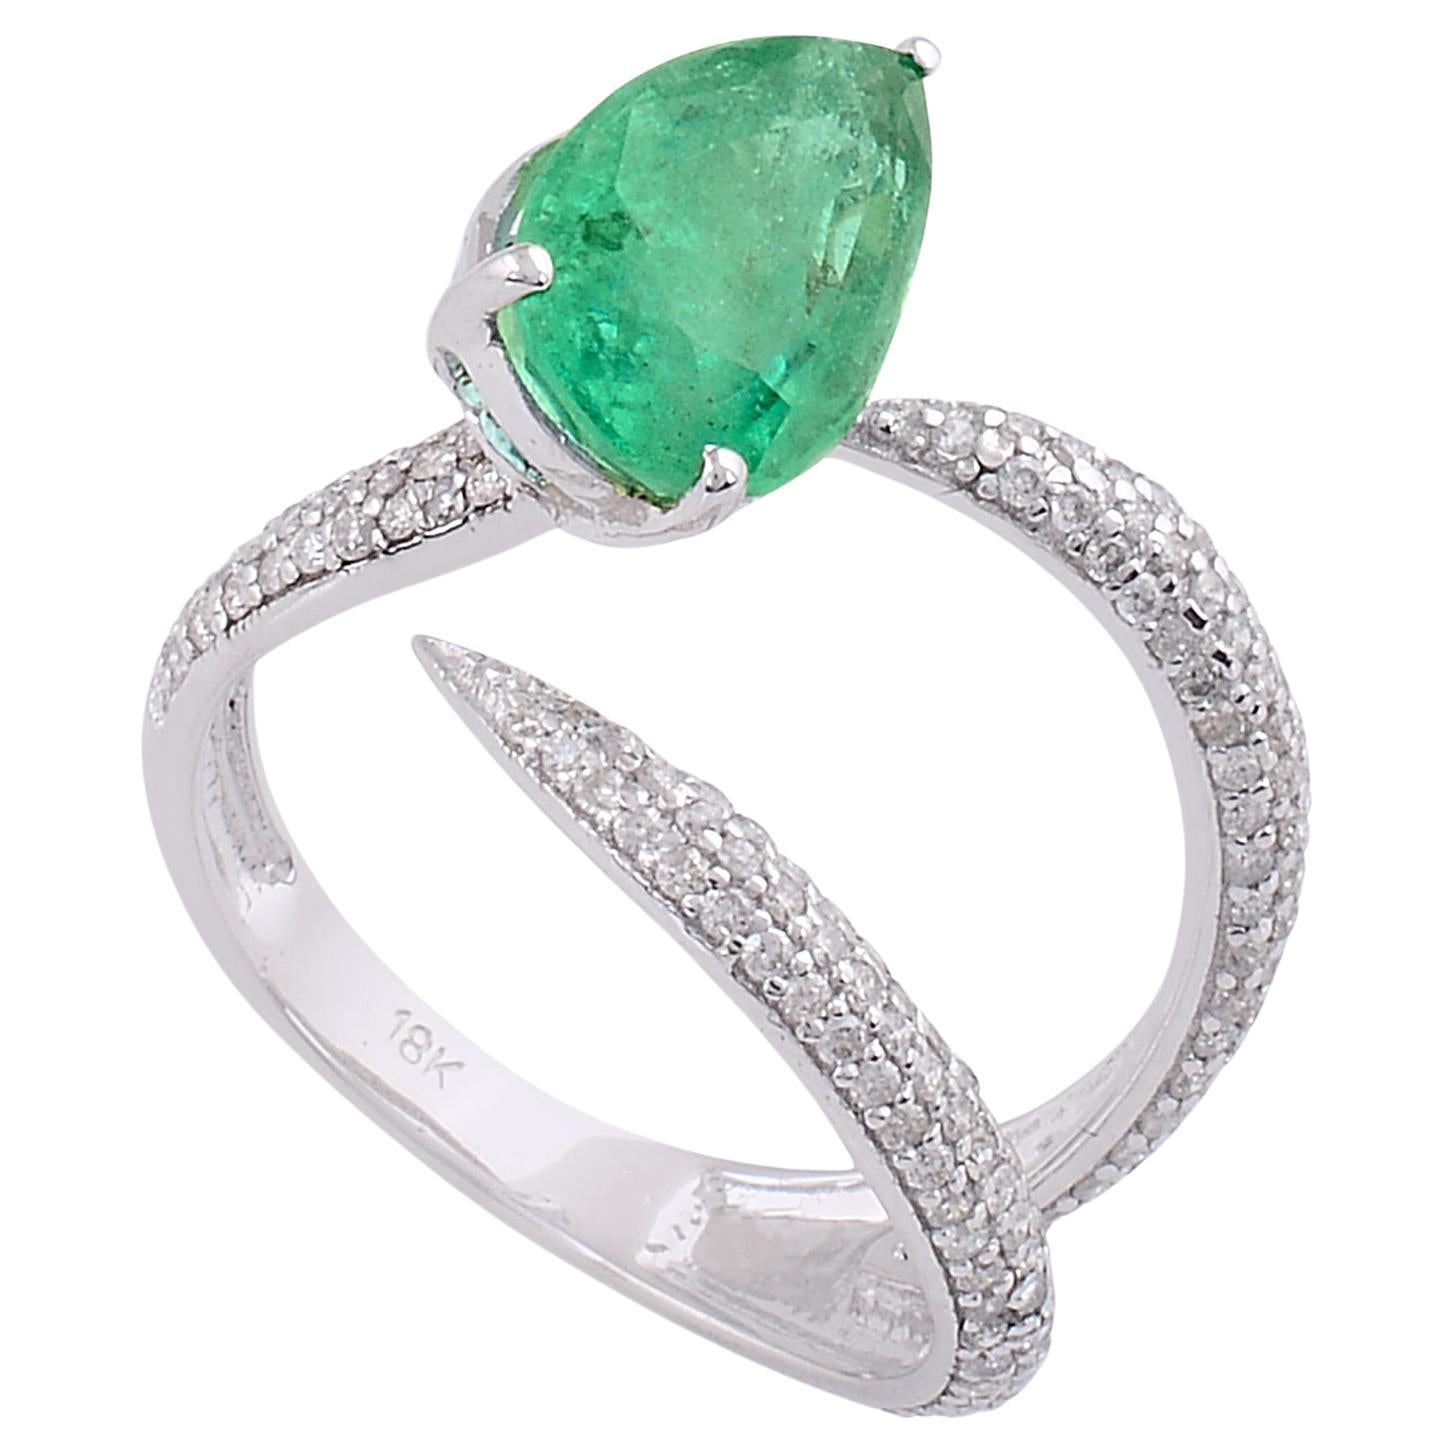 Zambian Emerald Gemstone Ring Diamond Pave 18 Karat White Gold Handmade Jewelry